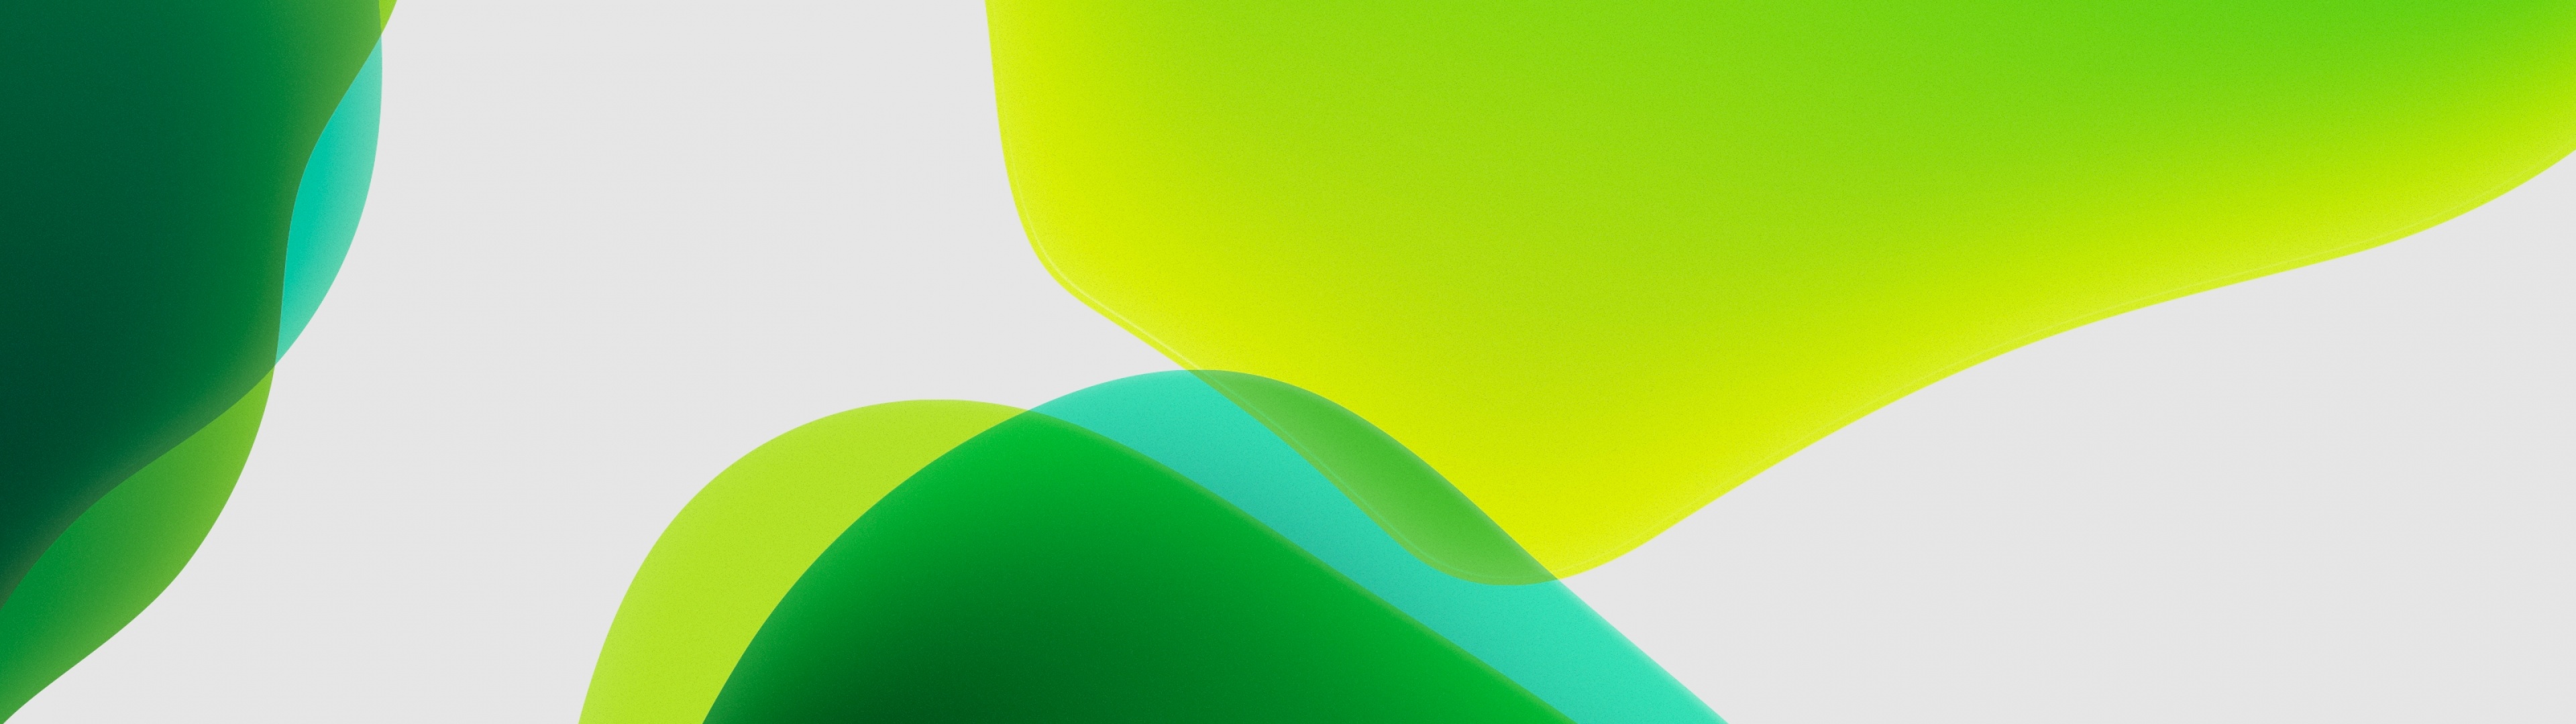 iPadOS Wallpaper 4K, Stock, Green, Abstract, #1549